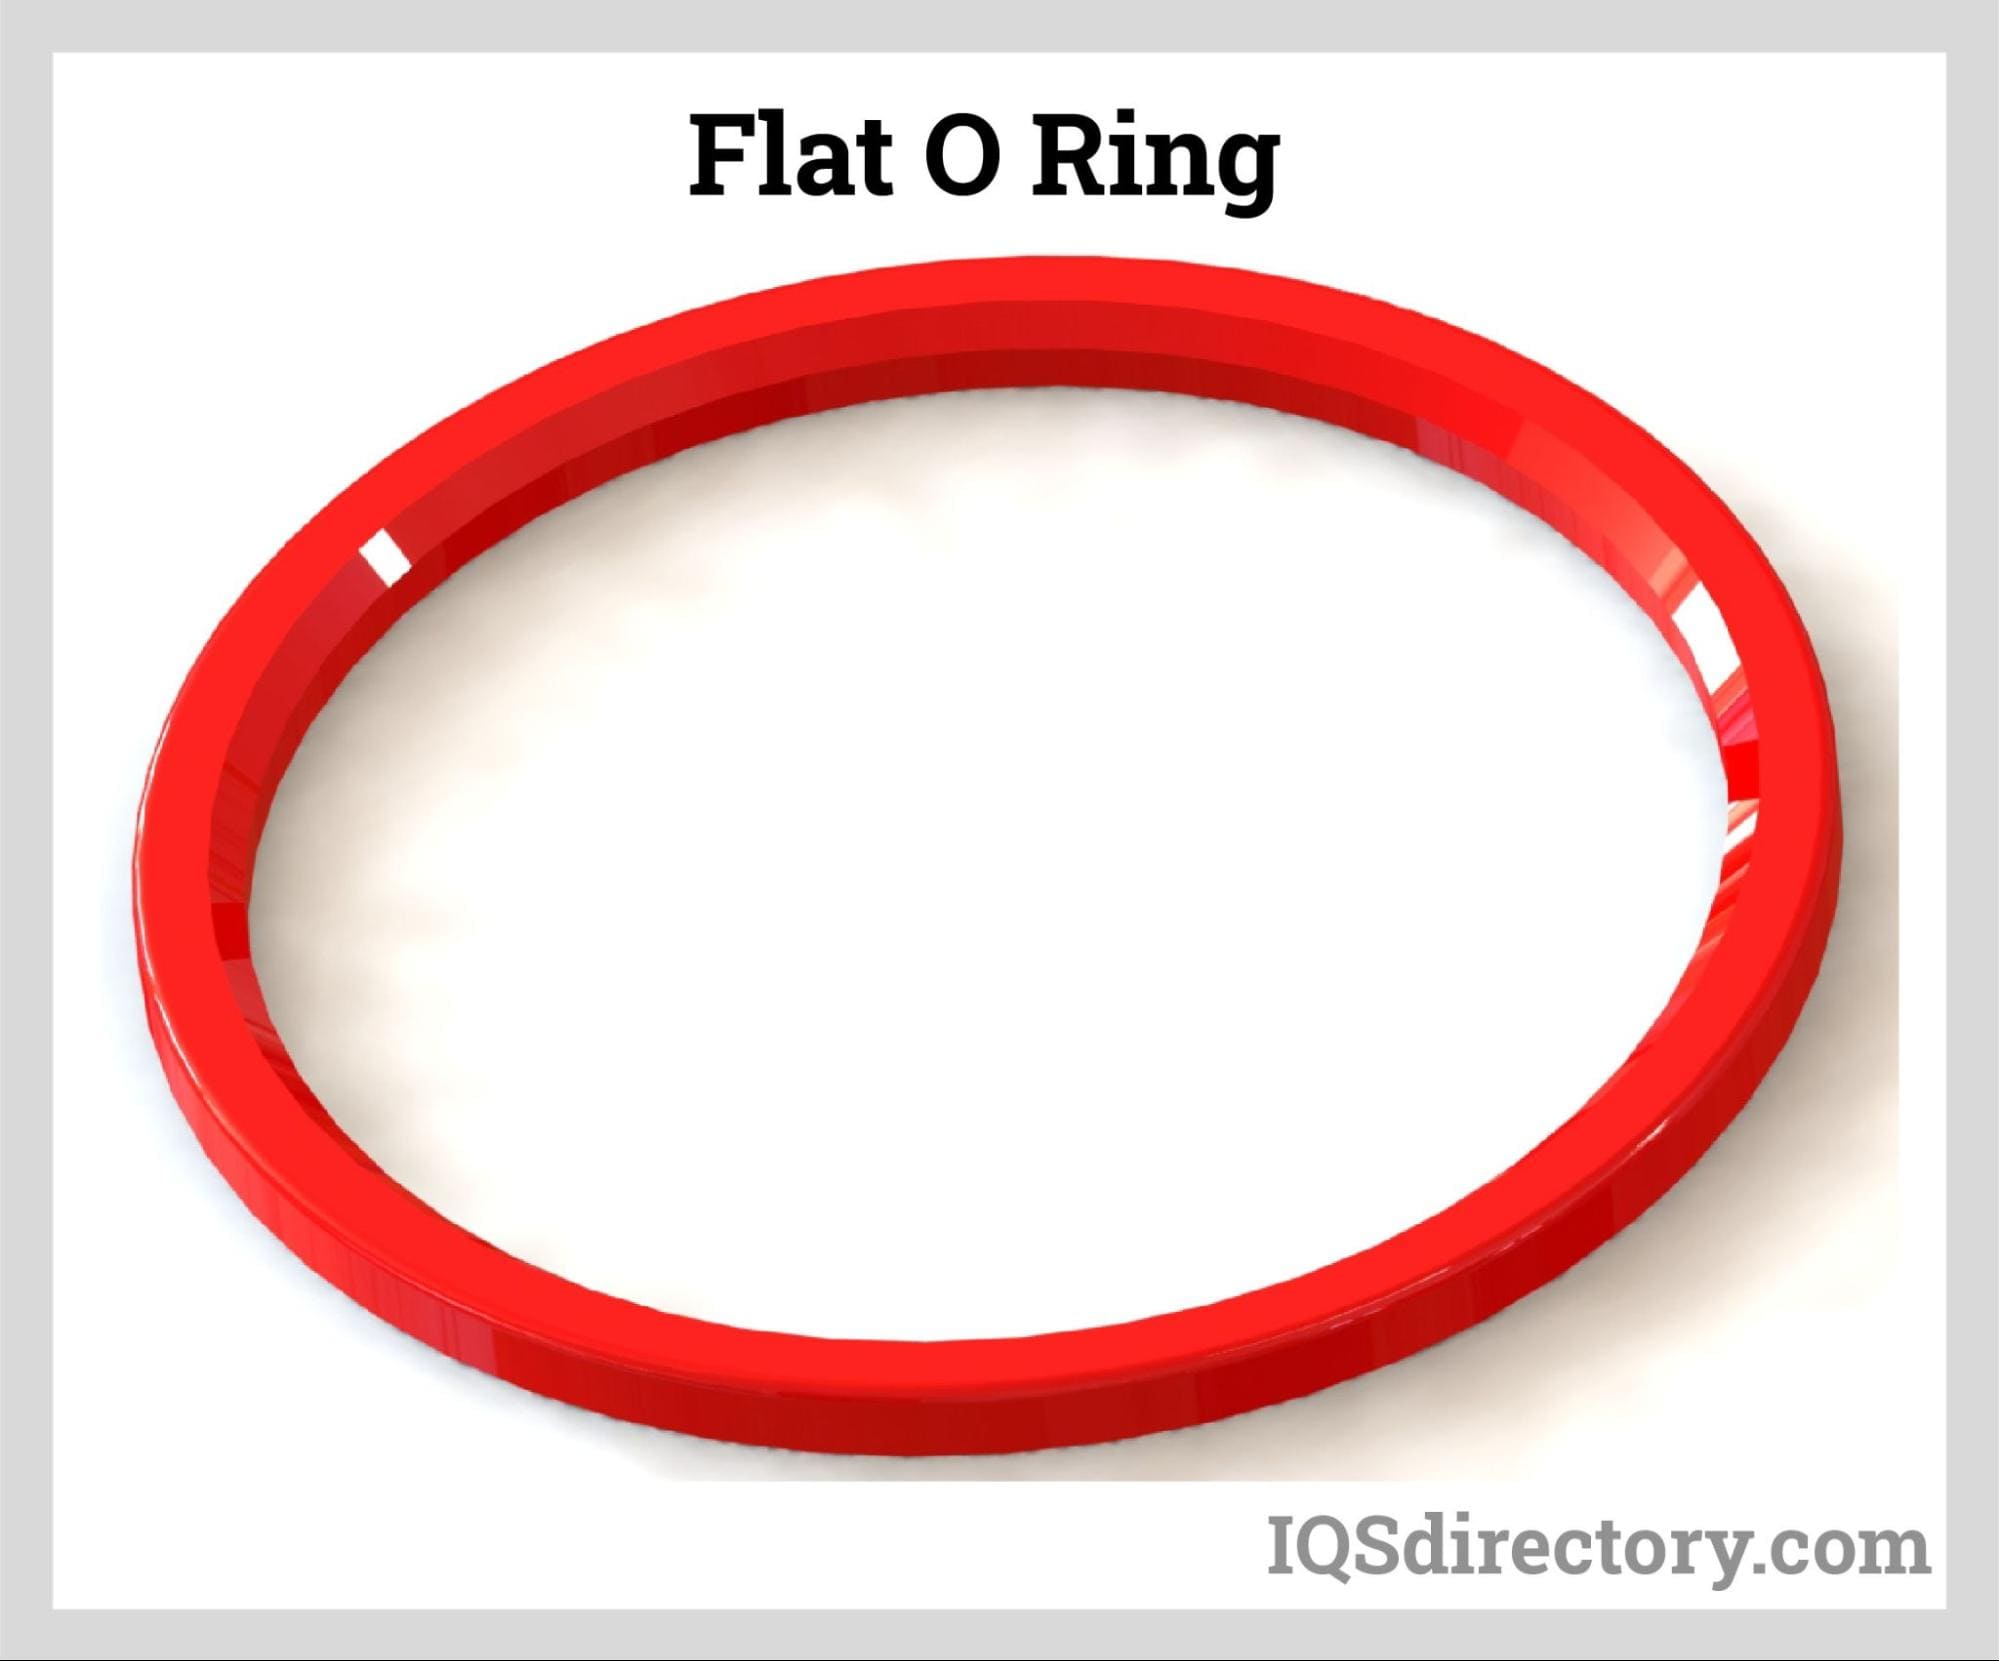 Flat O Ring